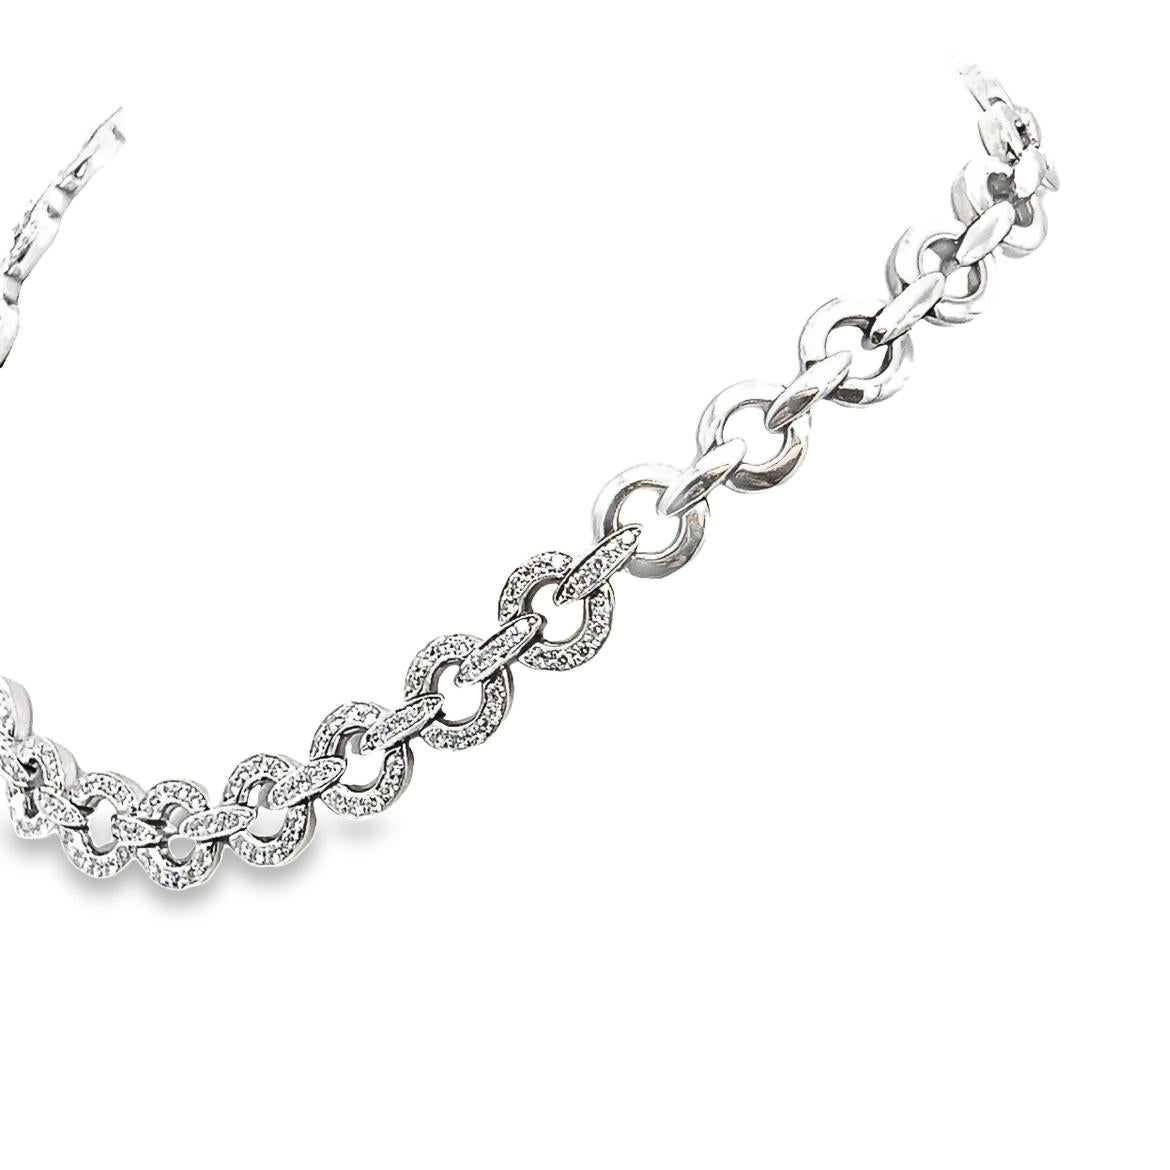 8.44CT Neck & Bracelet Diamond Set in 18K White Gold In New Condition For Sale In New York, NY